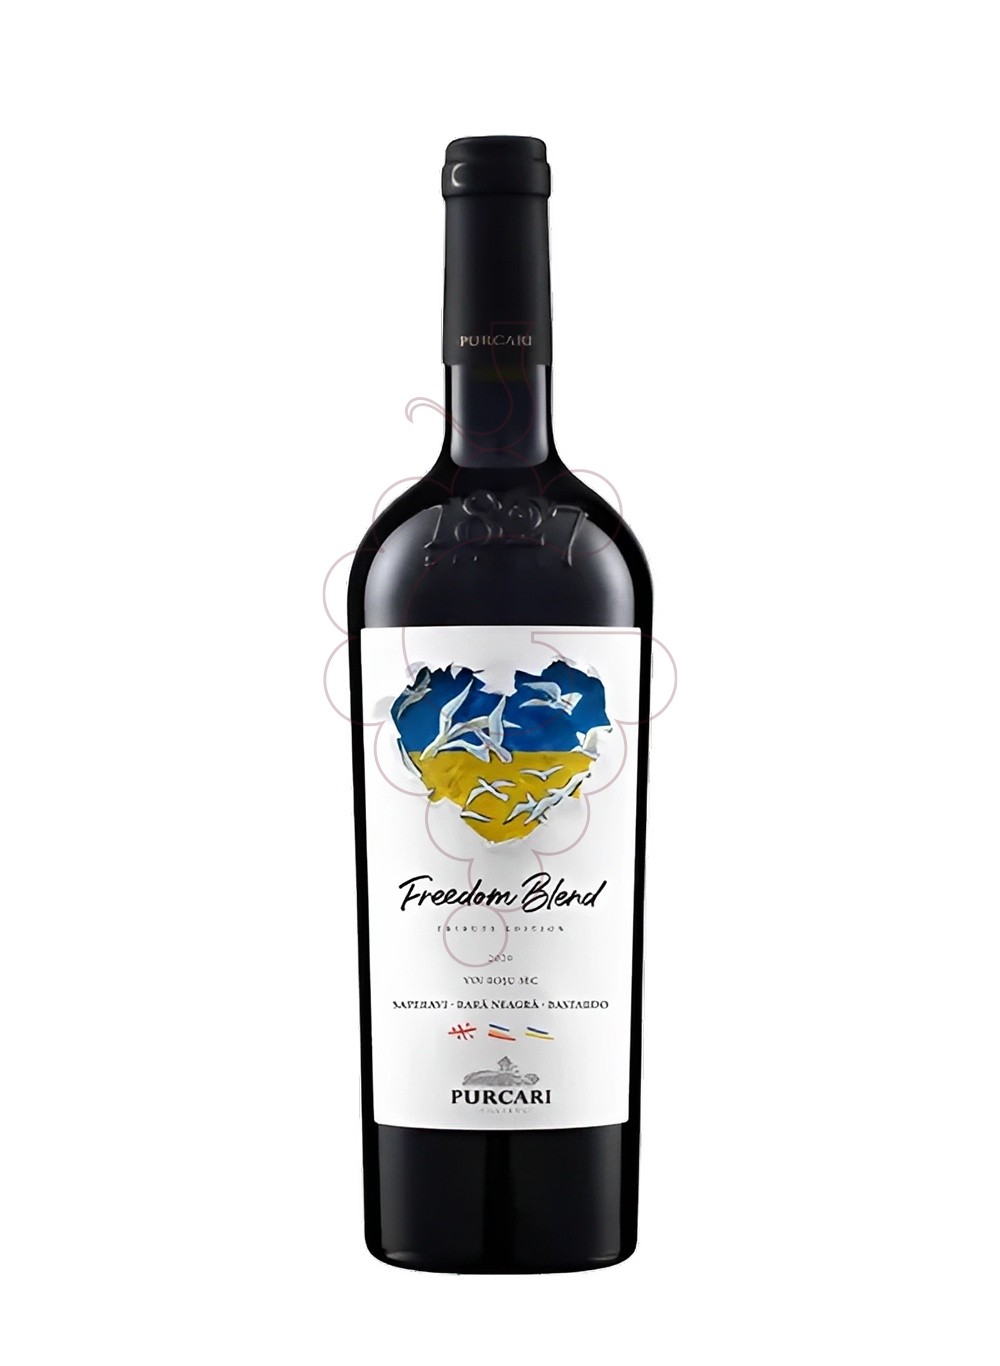 Photo Purcari Vinohora Freedom Blend vin rouge